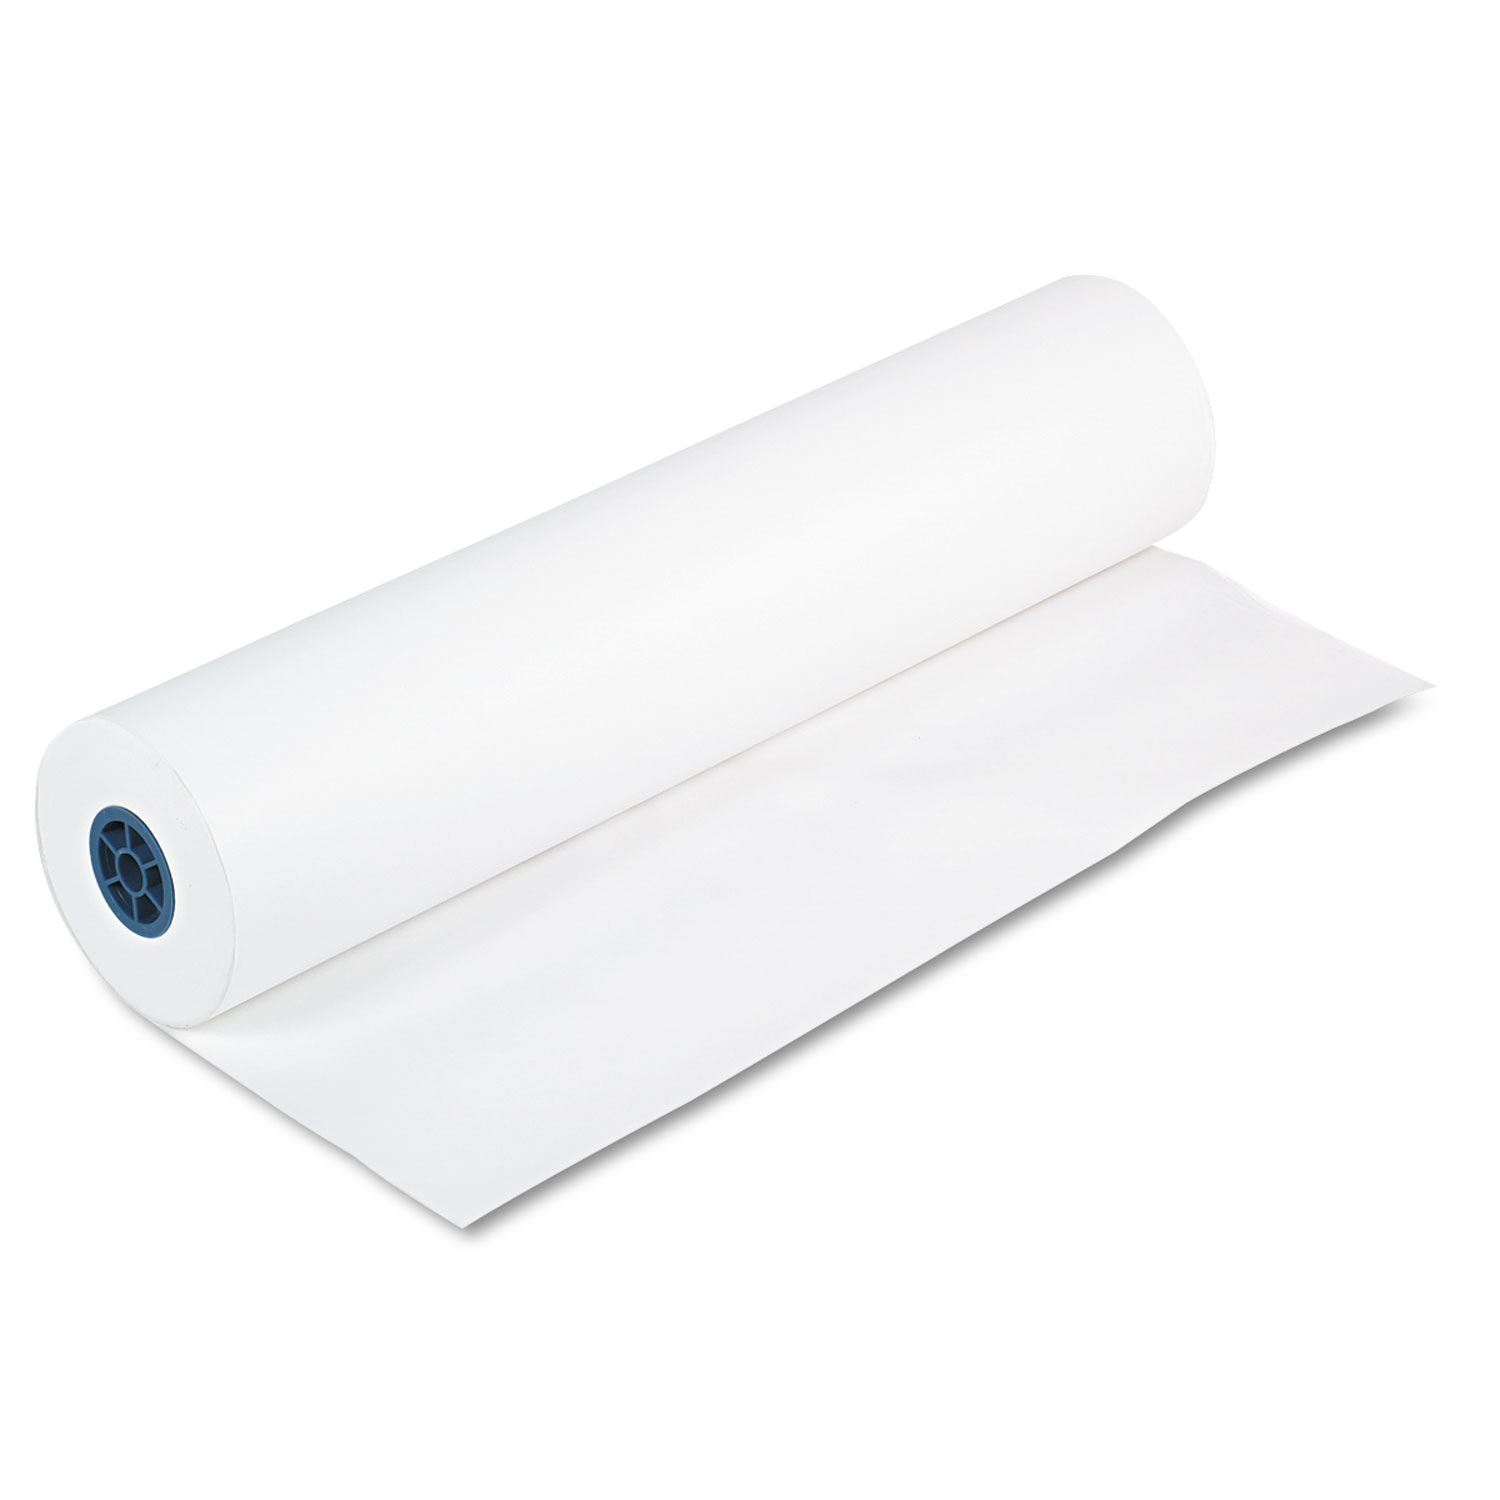  Pacon 5636 Kraft Paper Roll, 40lb, 36 x 1000ft, White (PAC5636) 